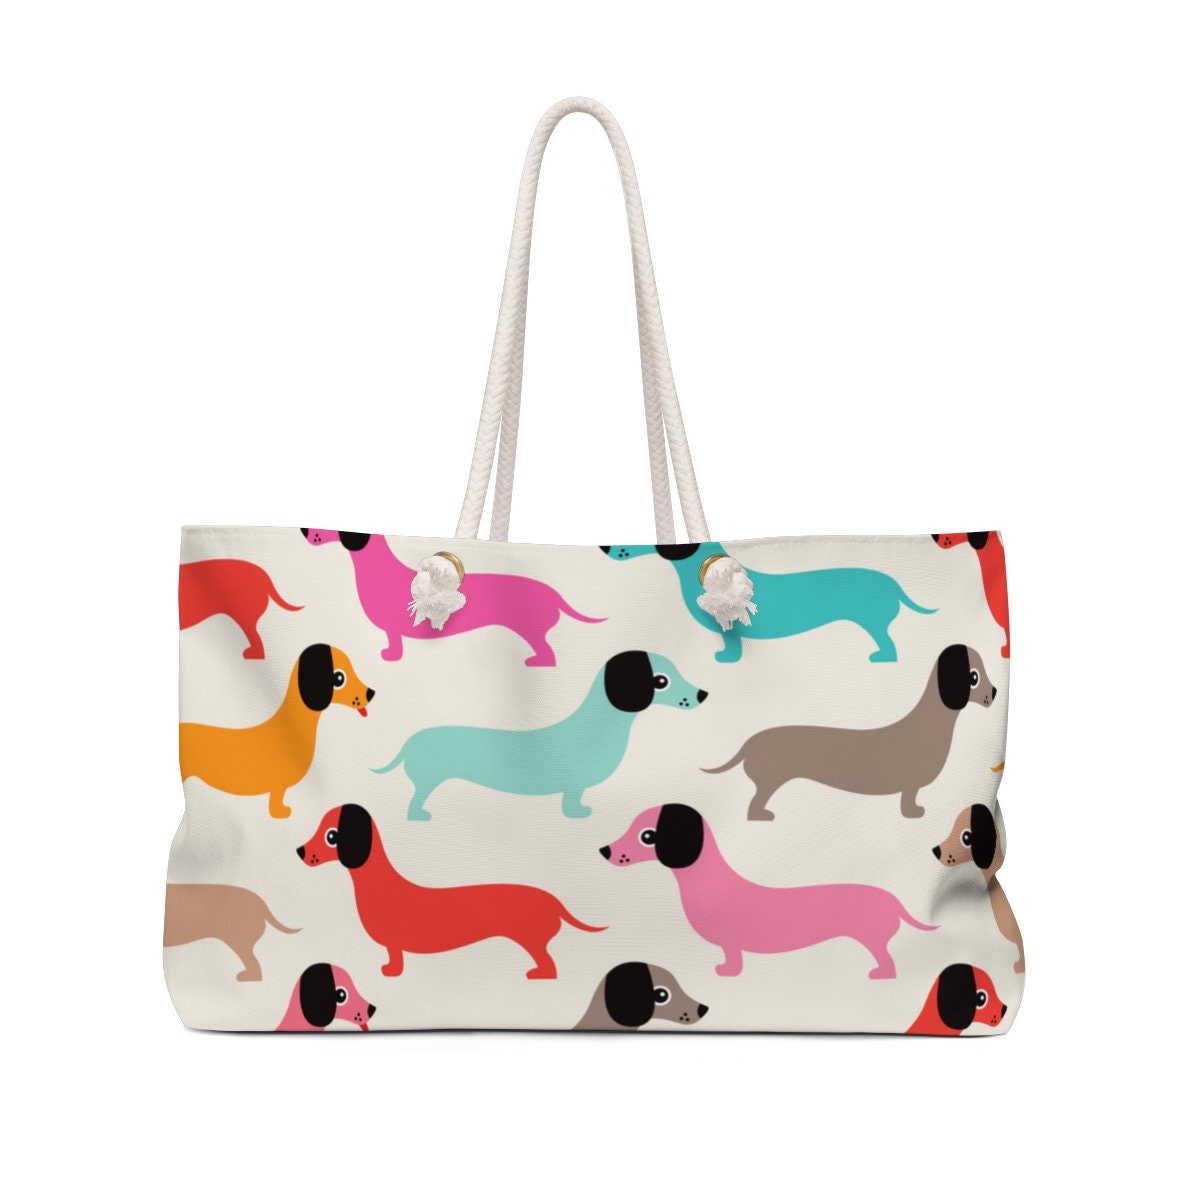 Dog Print Bag, Dog Beach Bags, Weekend Bag,Large Shopping bag,Dog pattern print bag,Gifts for her, Large Bag,Large Tote Bag,Wiener Dog Print